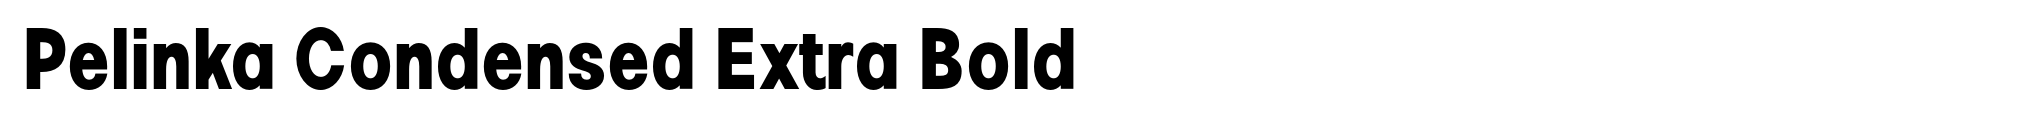 Pelinka Condensed Extra Bold image